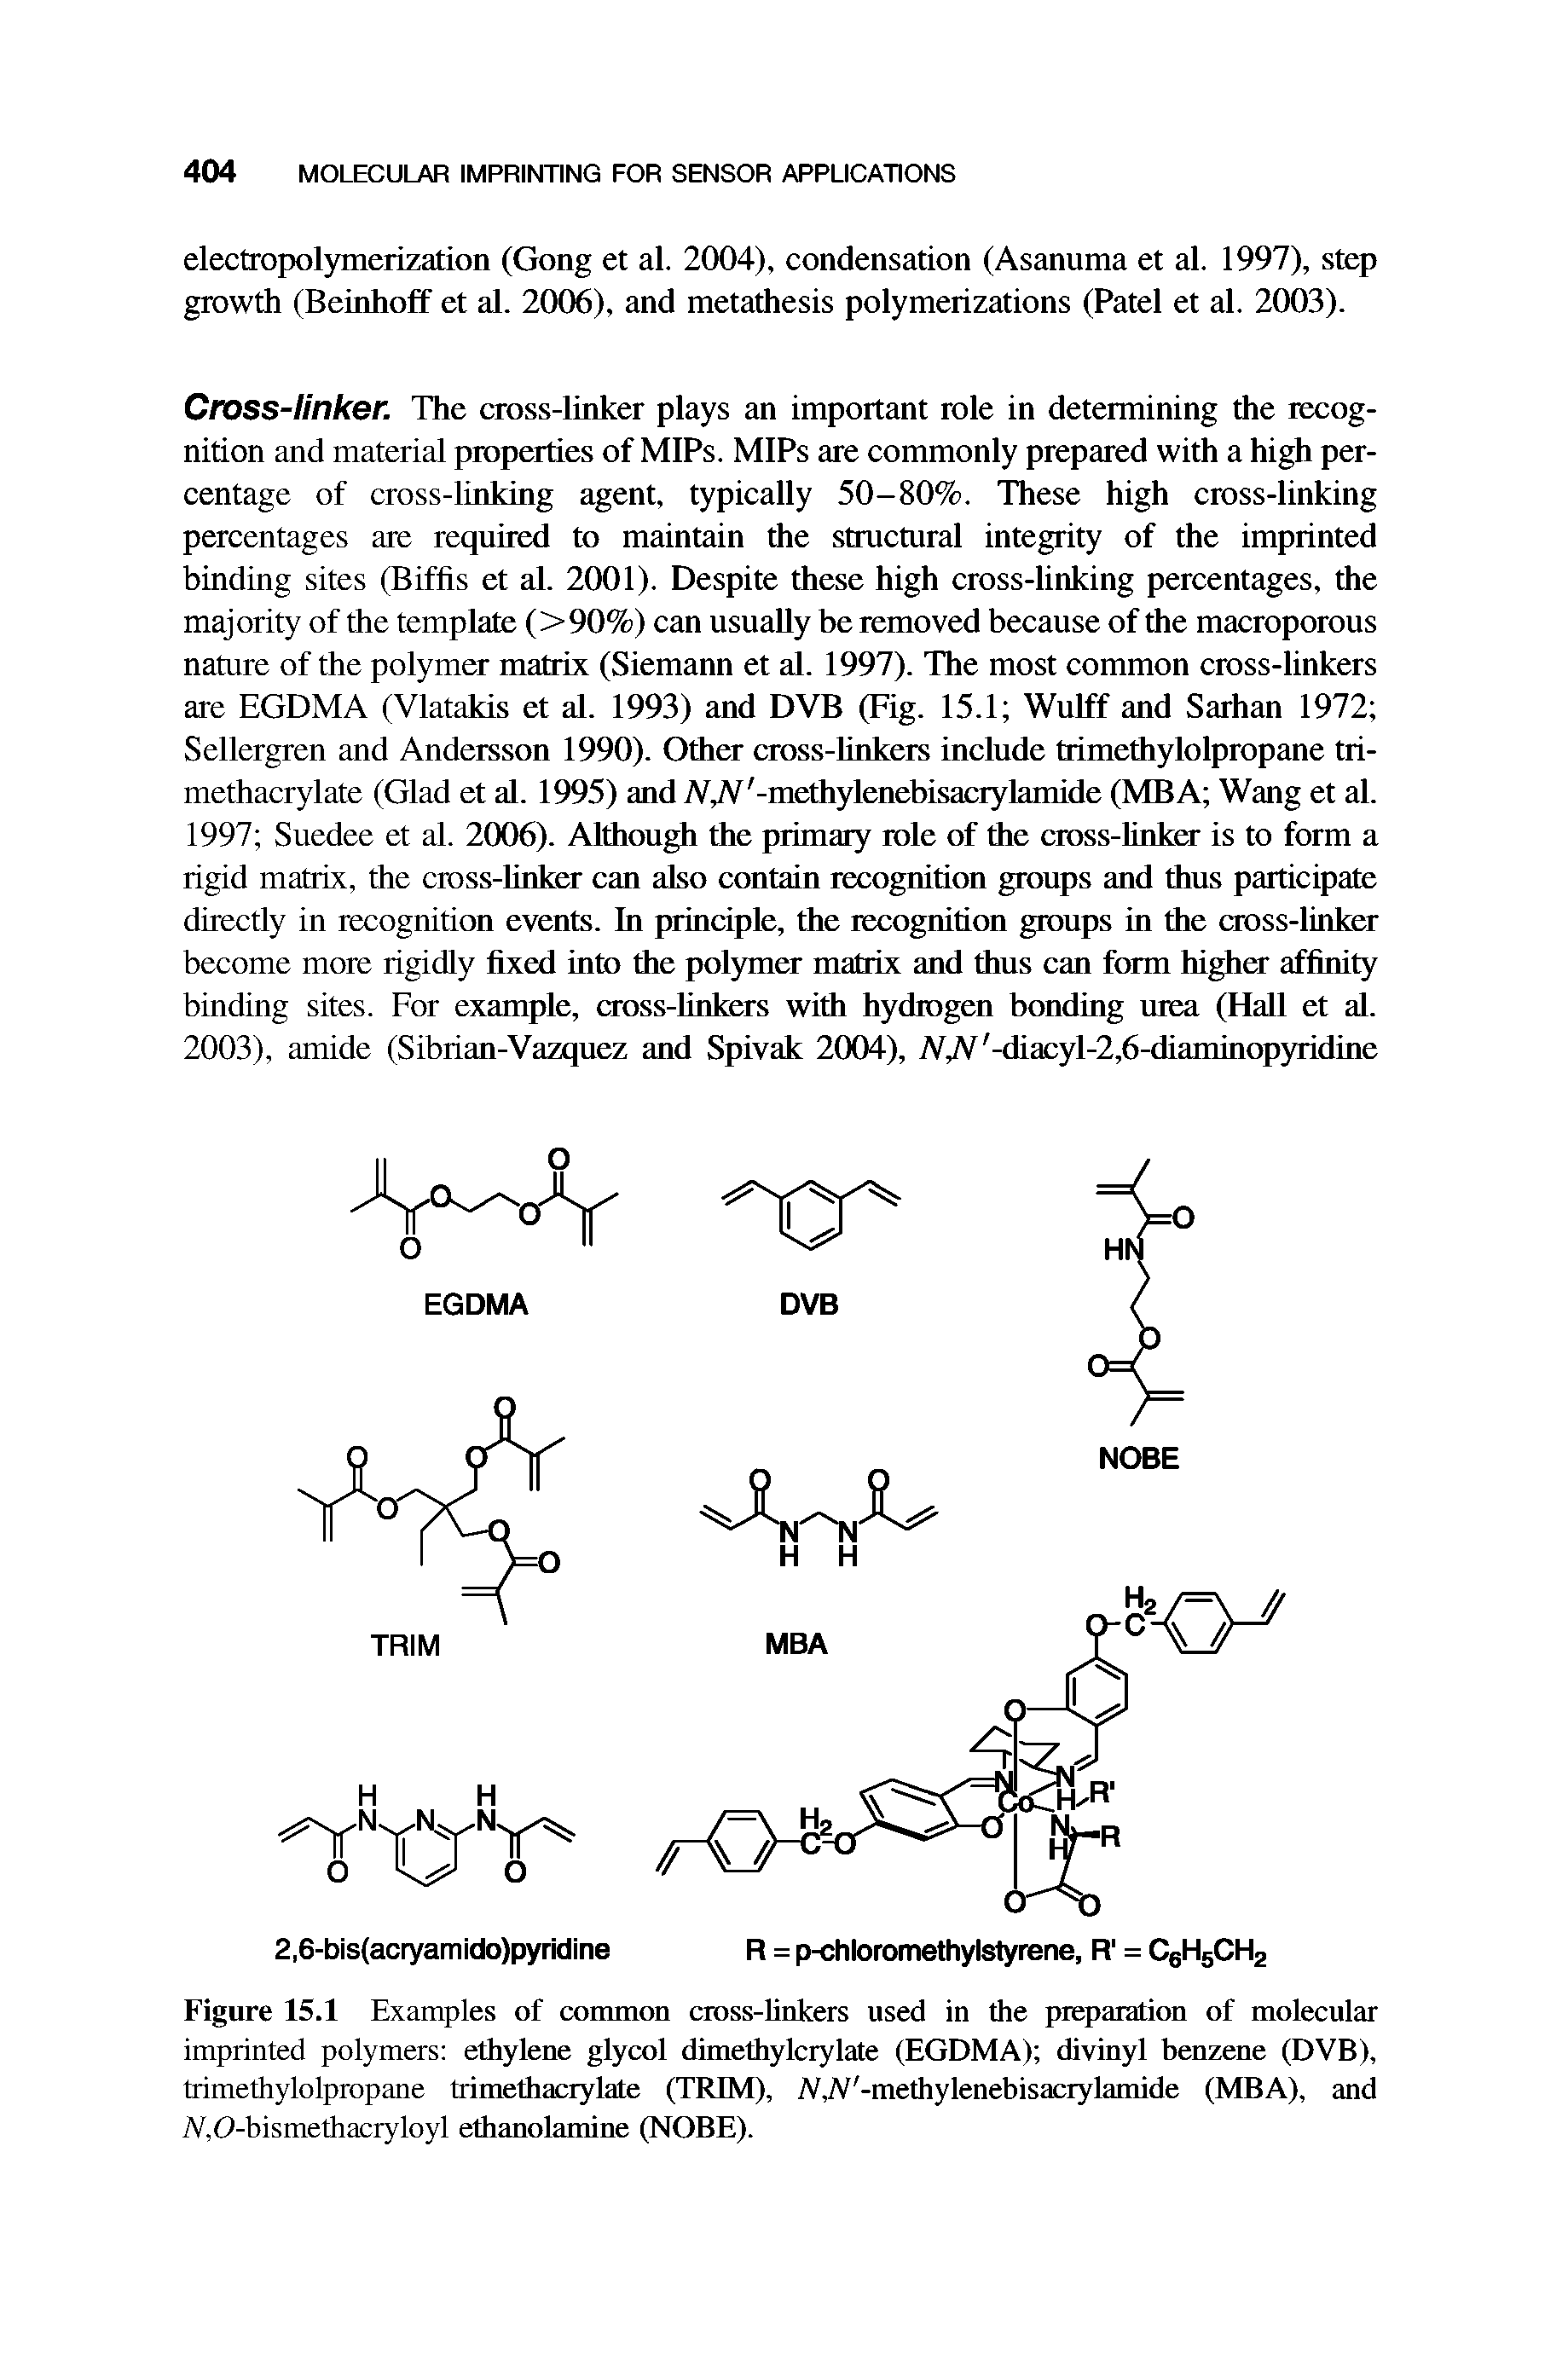 Figure 15.1 Examples of common cioss-liiikers used in the preparation of molecular imprinted polymers ethylene glycol dimethylcrylate (EGDMA) divinyl benzene (DVB), trimethylolpropane trimethacrylate (TRIM), VA -methylenebisacrylamide (MBA), and V,0-bismethacryloyl ethanolamine (NOBE).